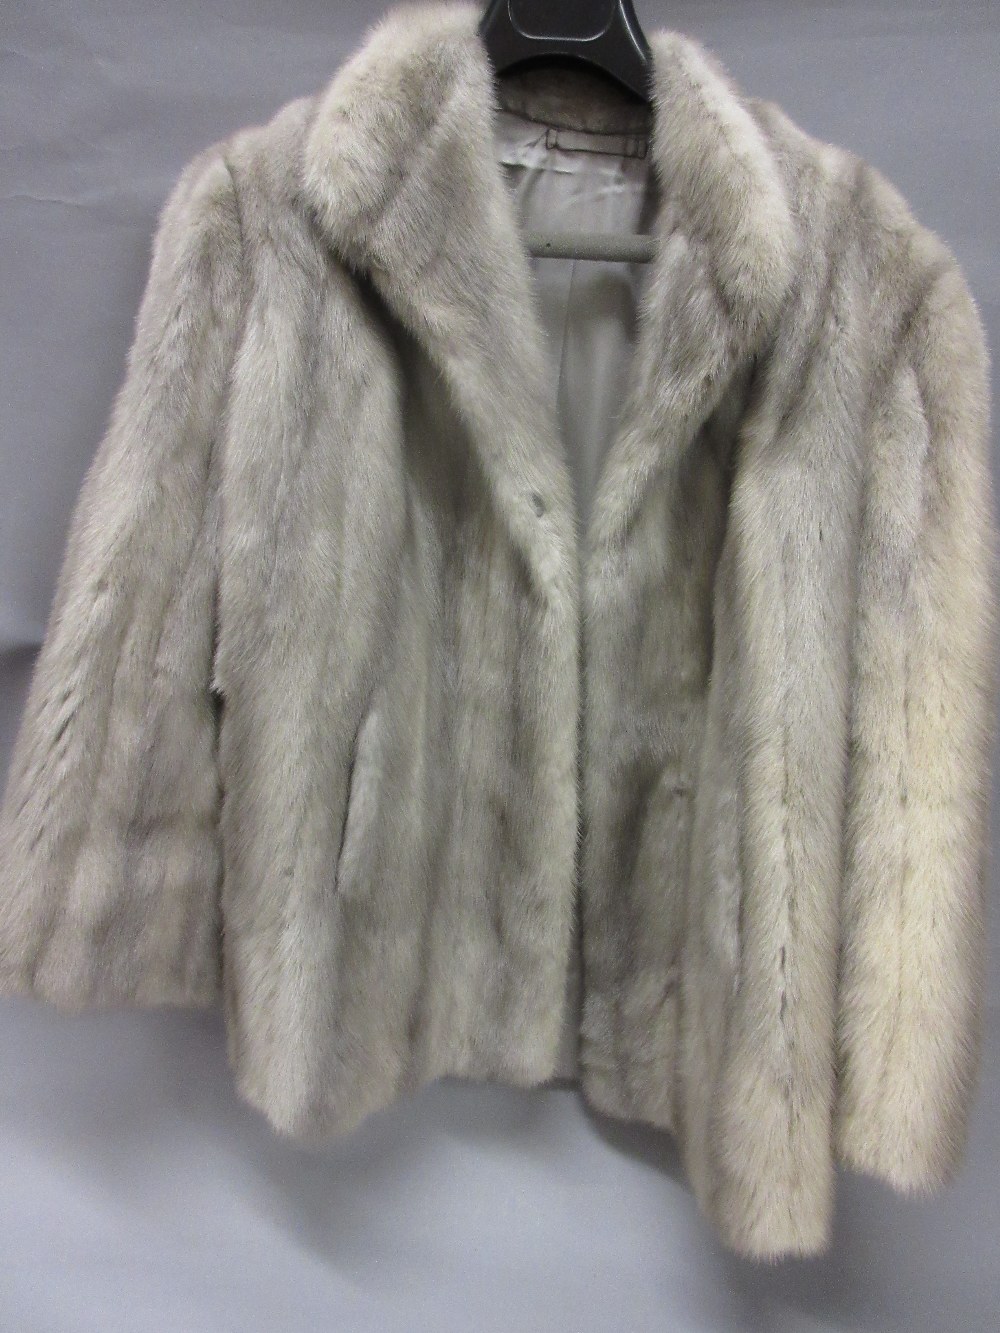 Ladies white fur half length fur coat by Grosvenor exclusive to Harrods, - Image 2 of 2